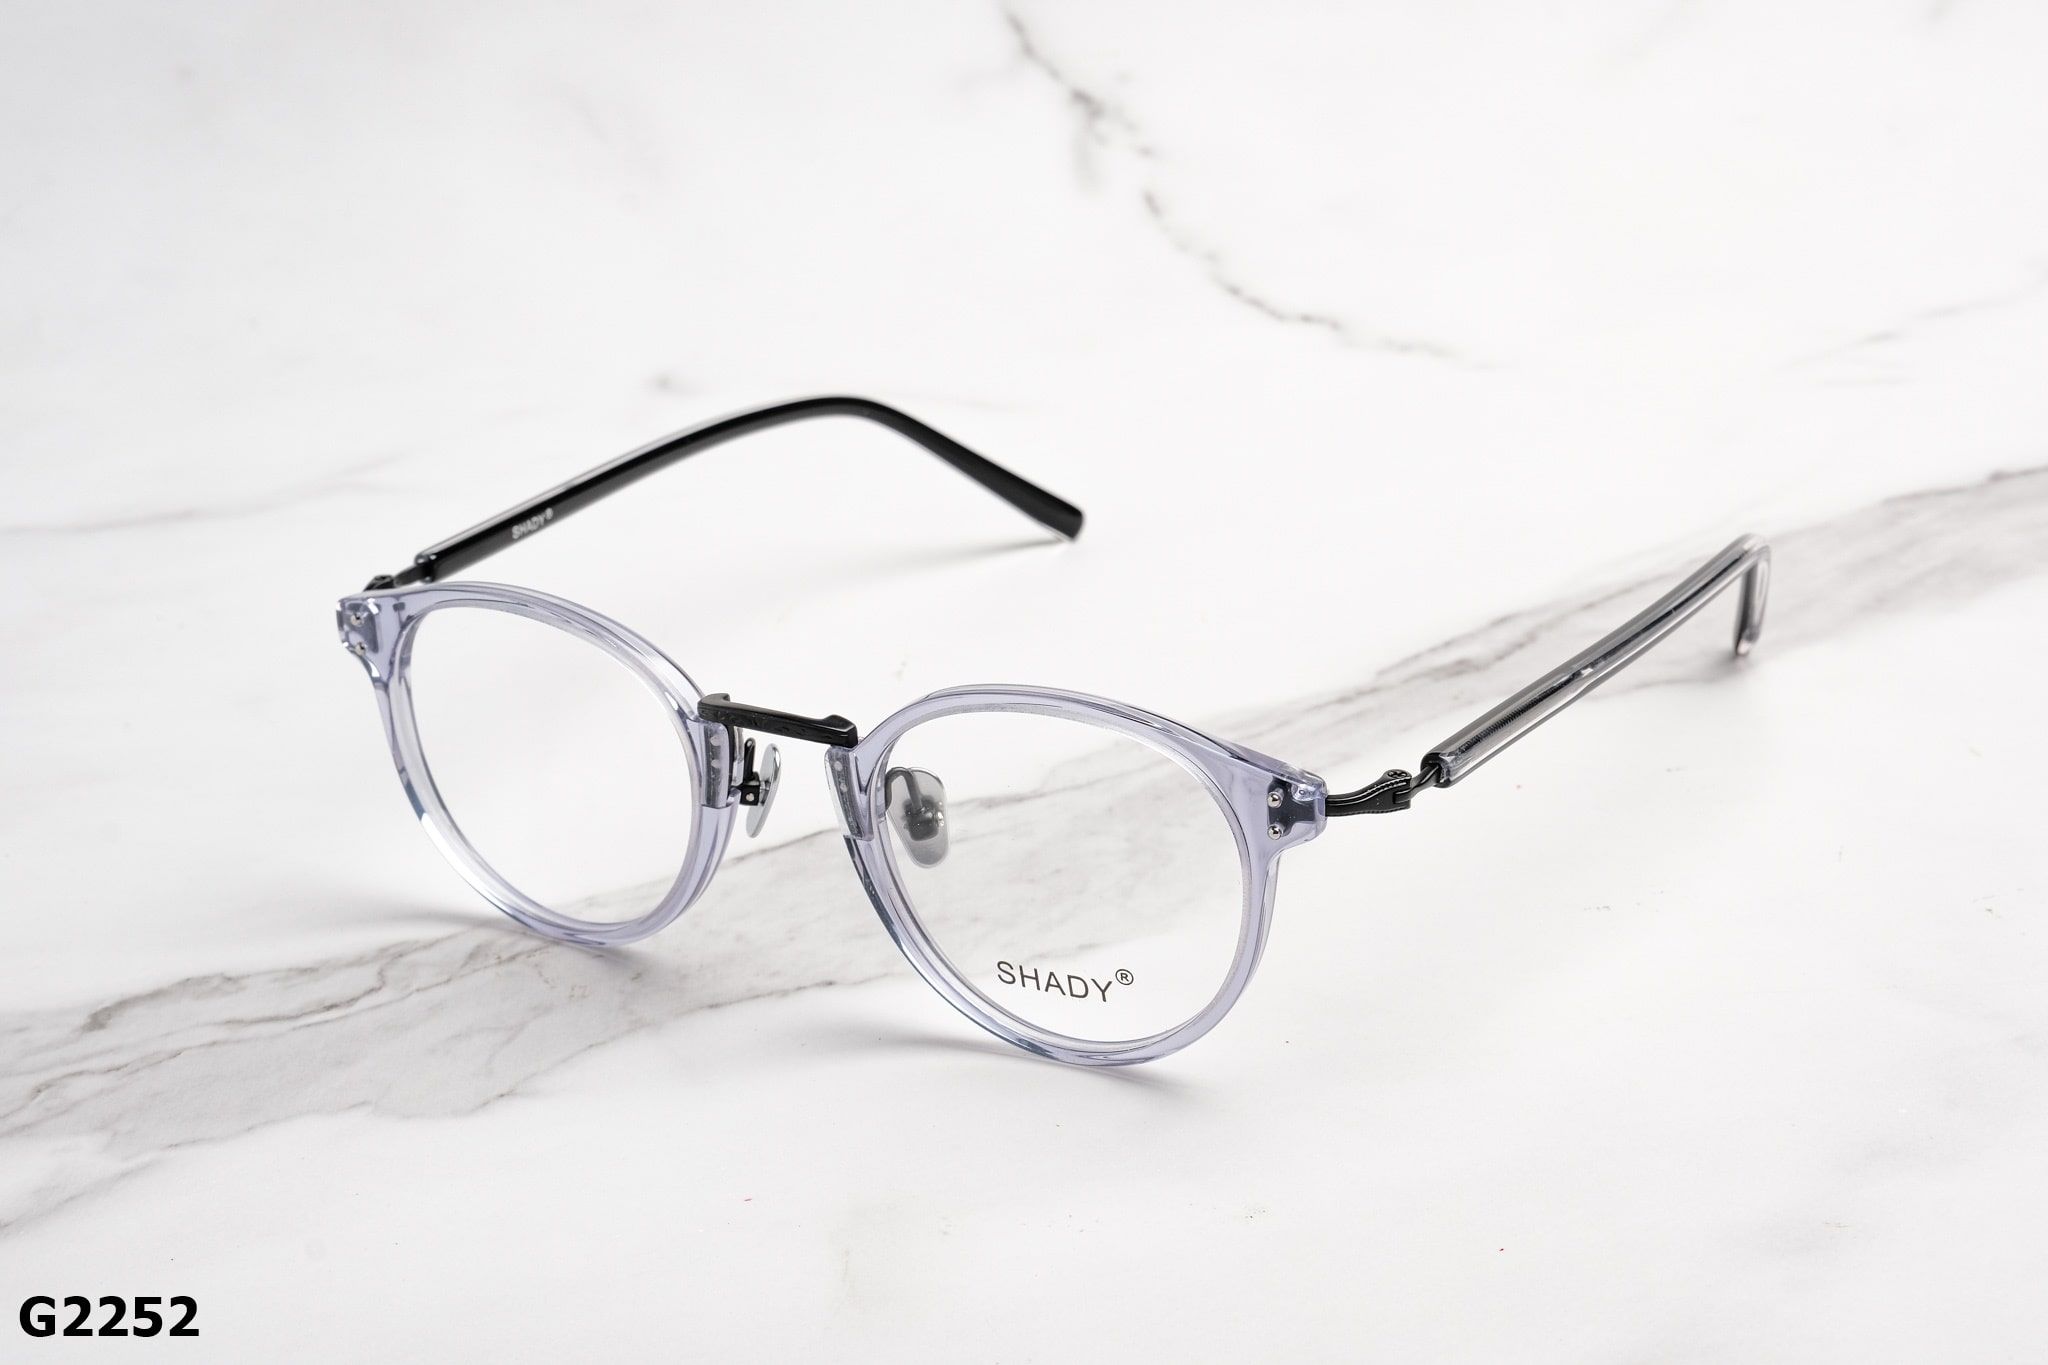  SHADY Eyewear - Glasses - G2252 